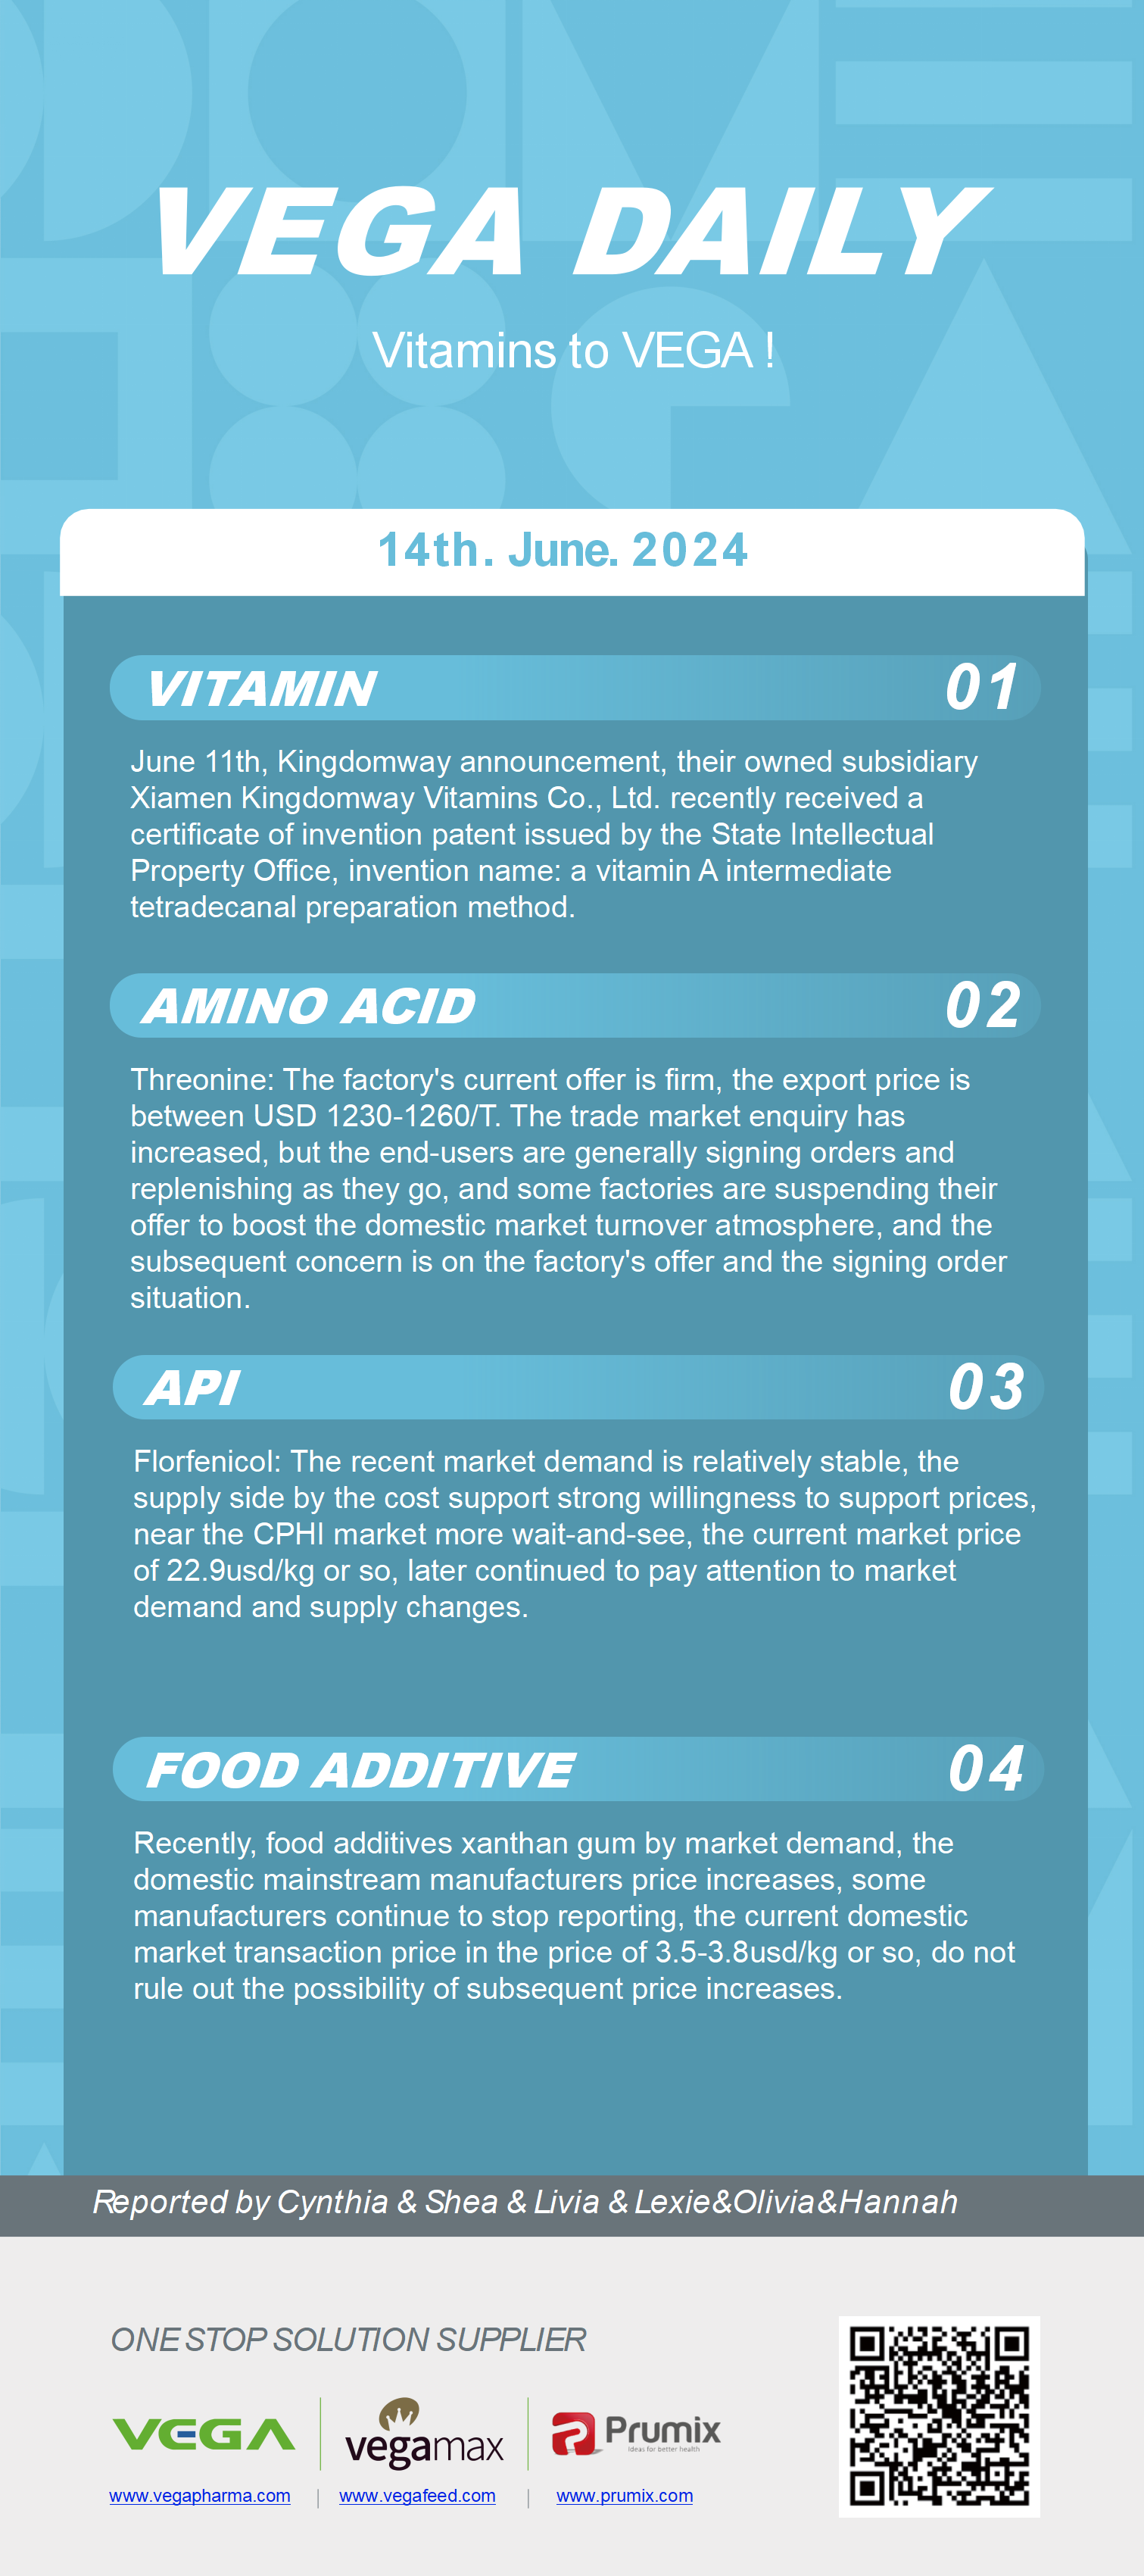 Vega Daily Dated on Jun 14th 2024 Vitamin Amino Acid APl Food Additives.png